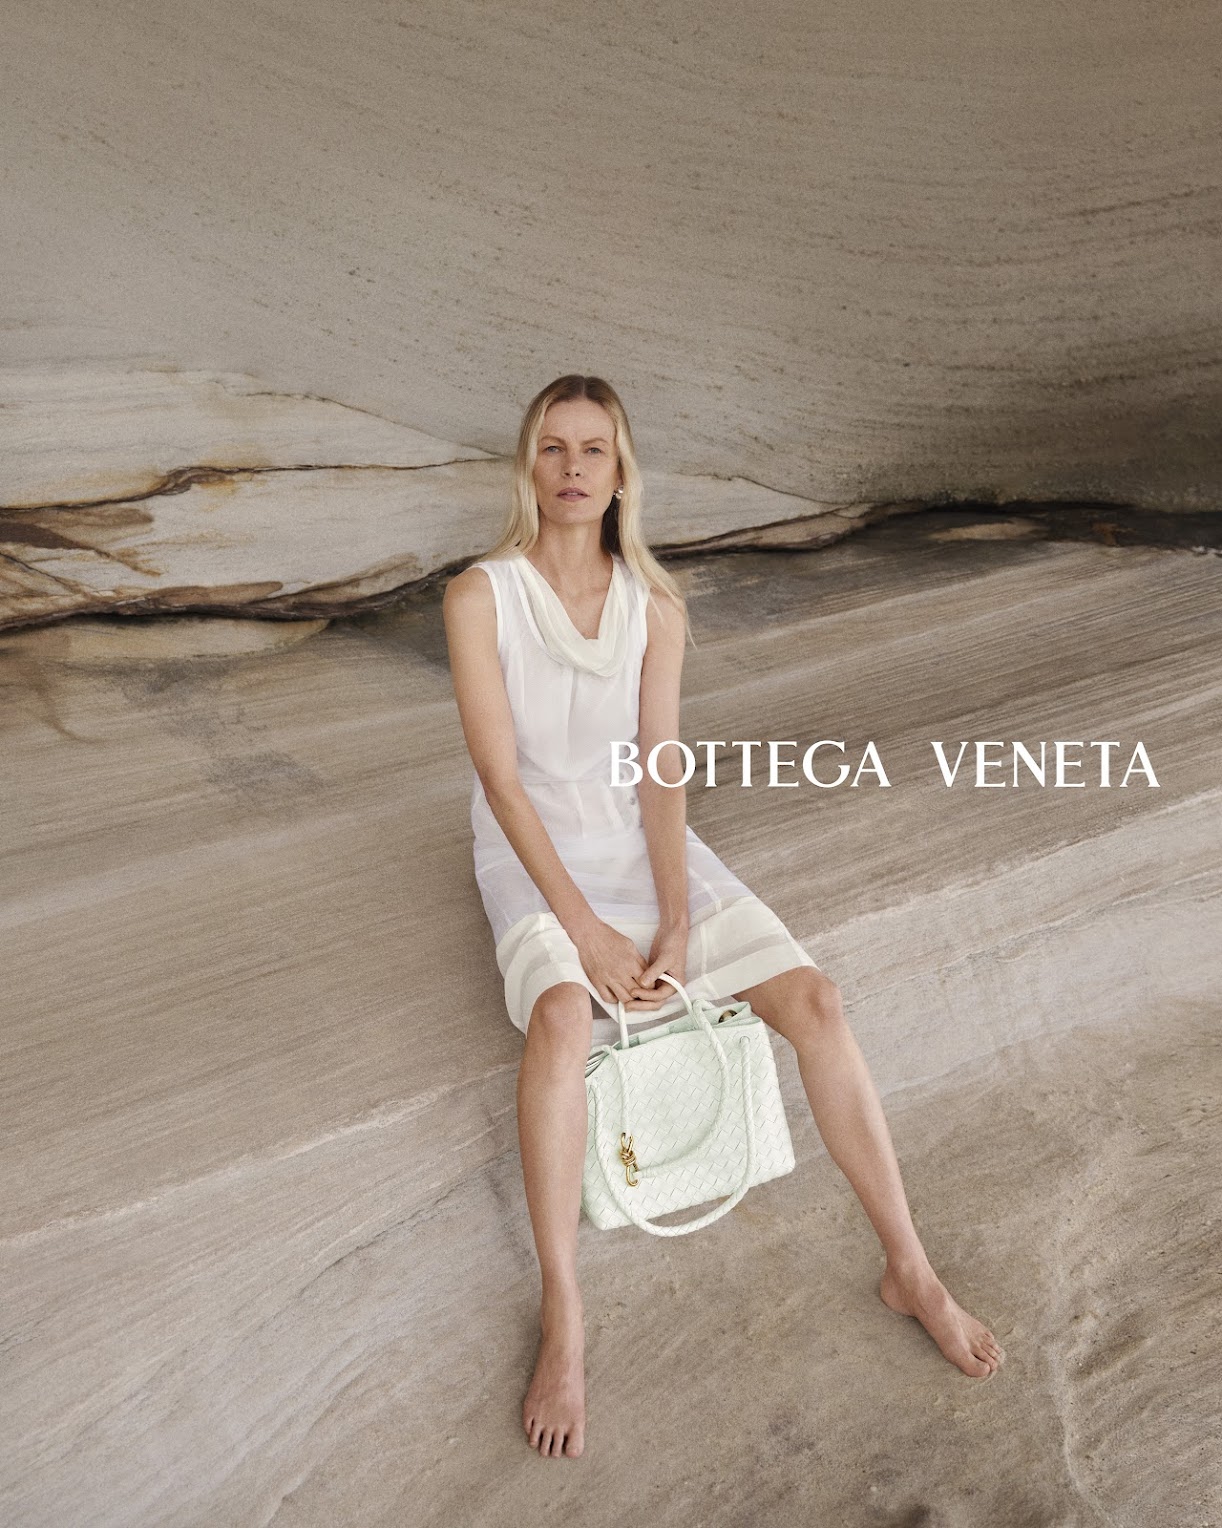 The Bottega Veneta Andiamo Bag Is as Nonchalant as Its Name Suggests - Men's  Folio